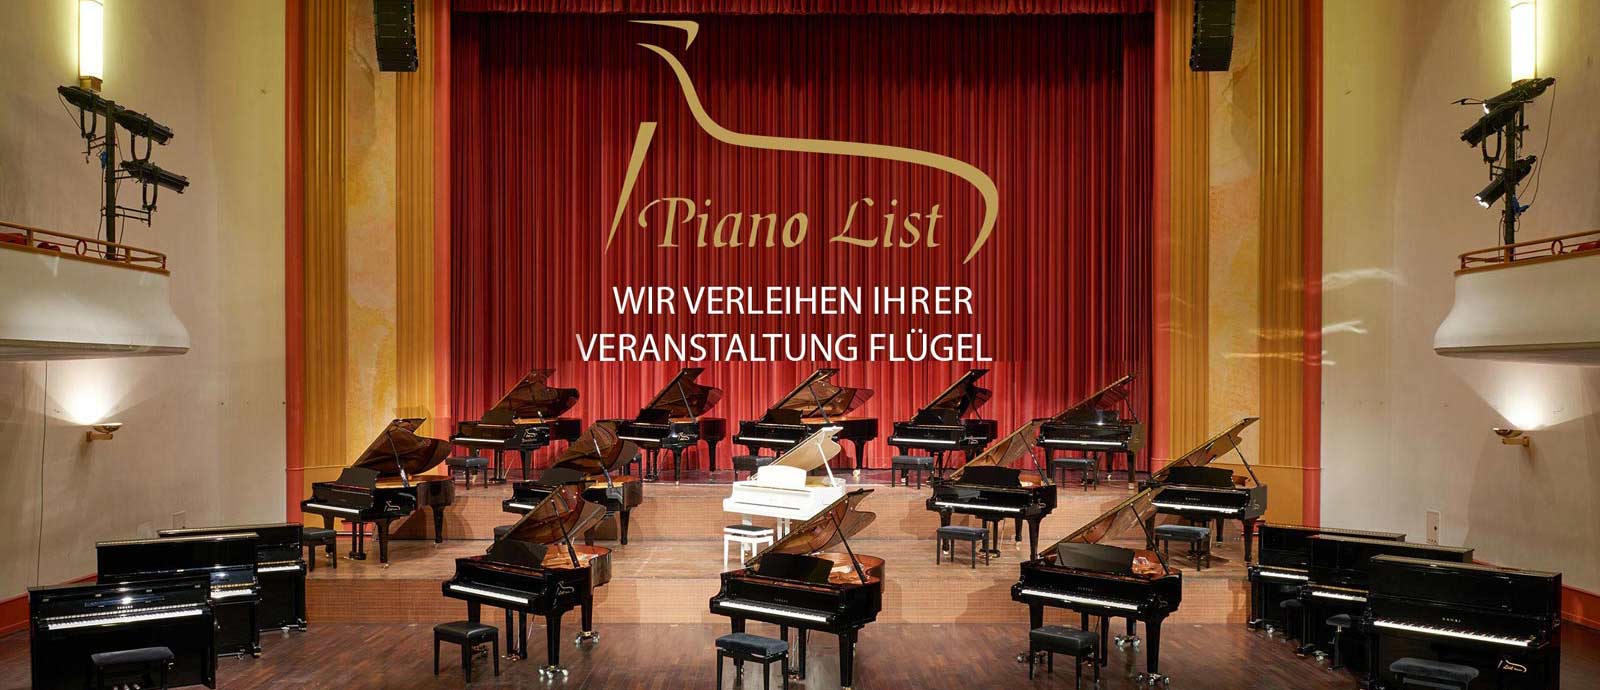 Piano List